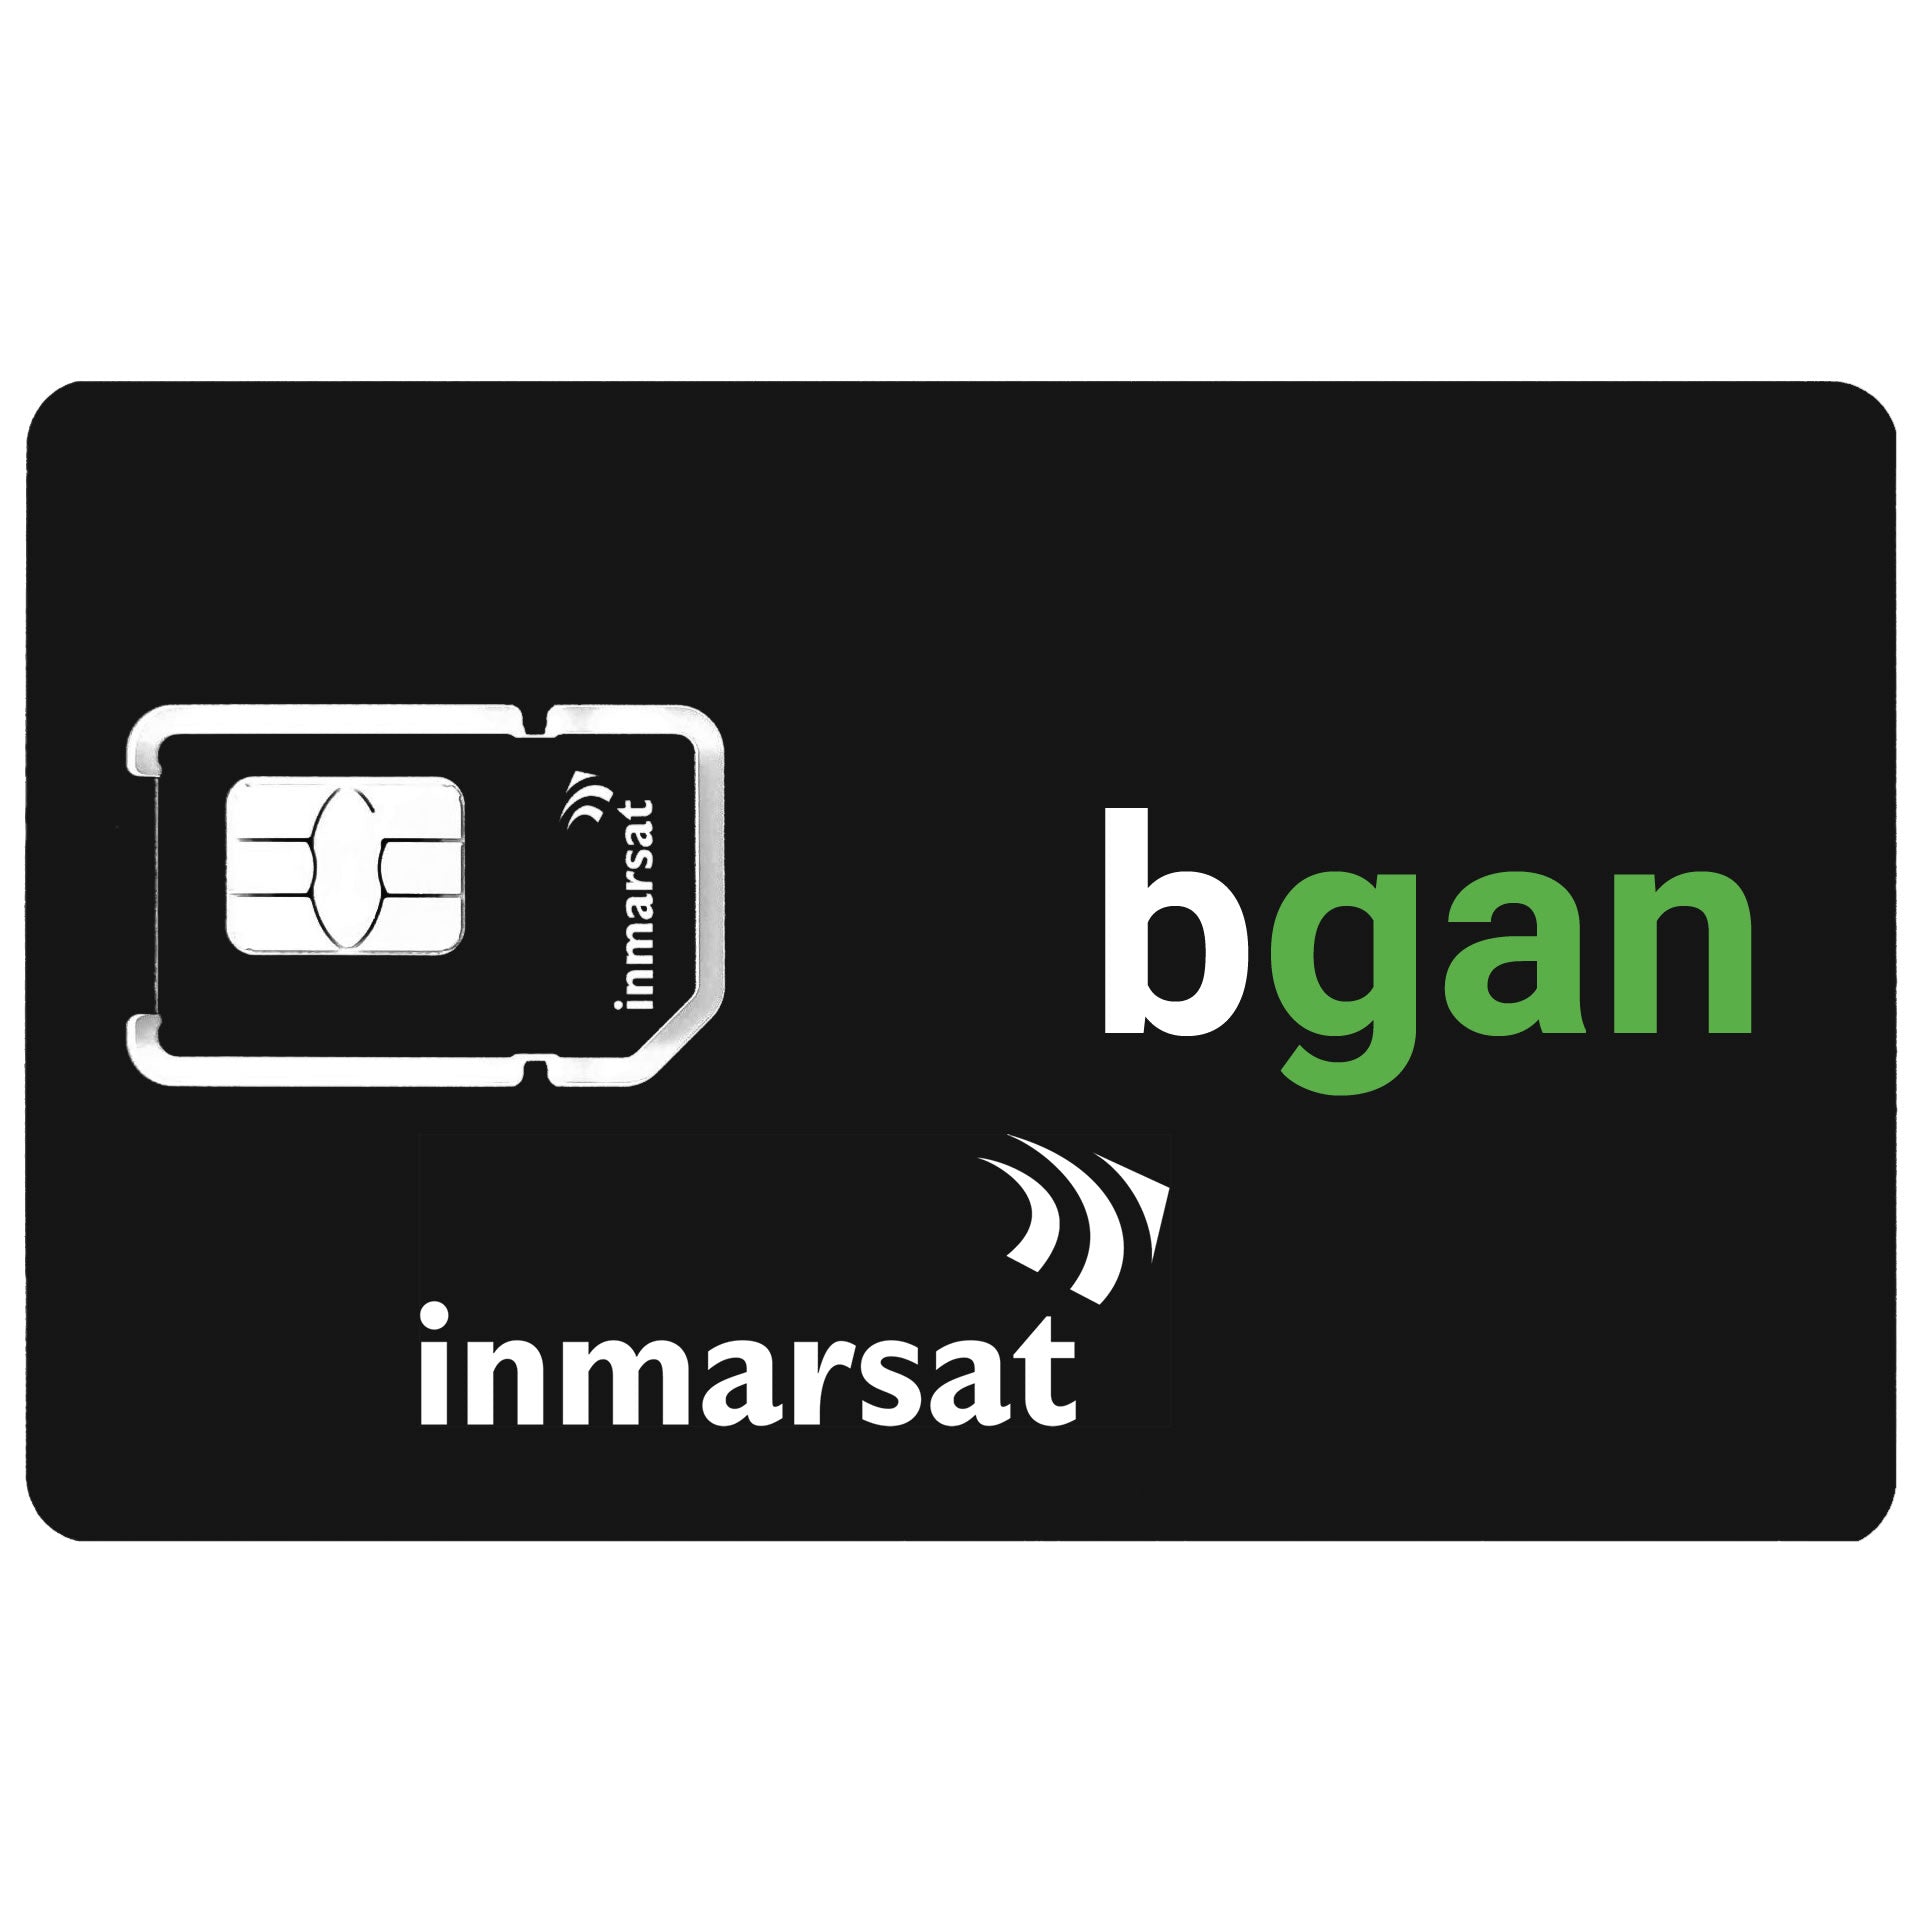 INMARSAT Prepaid-Karte, wiederaufladbar BGAN/IsatHub - 50 UNITS - 90 TAGE